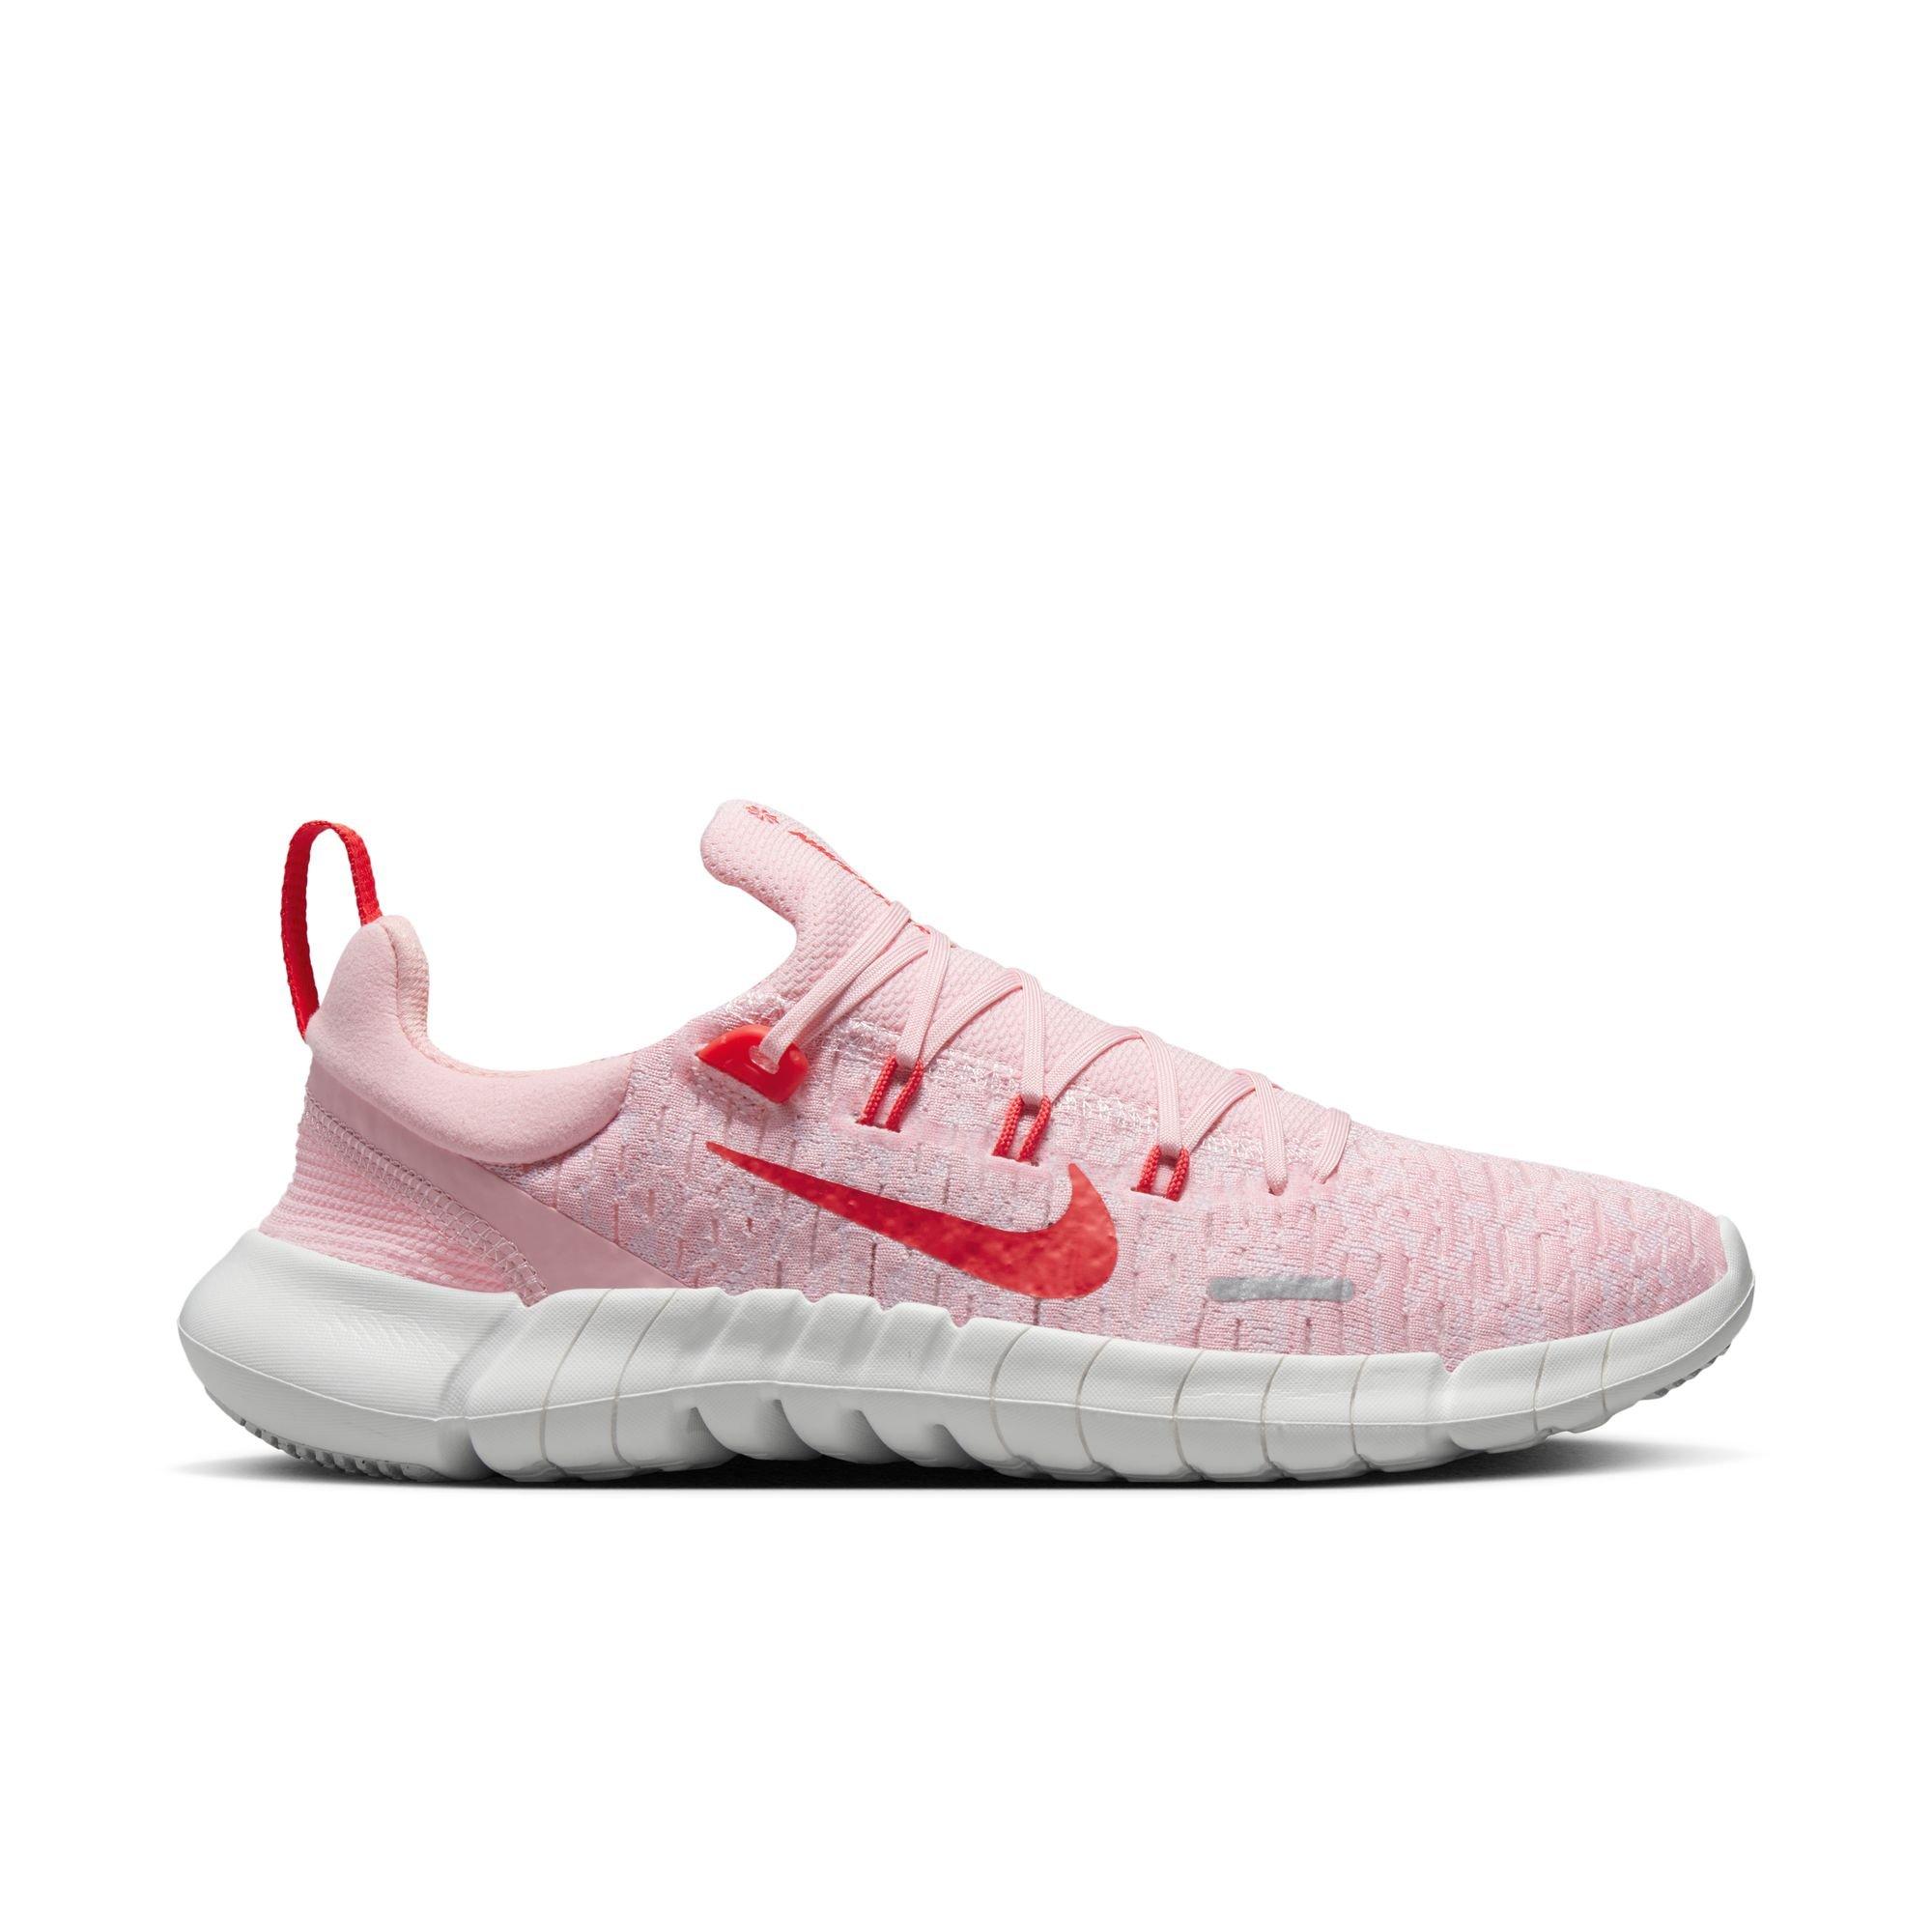 Nike Free Run 5.0 Nature "Med Soft Pink/Lt Foam" Women's Running Shoe